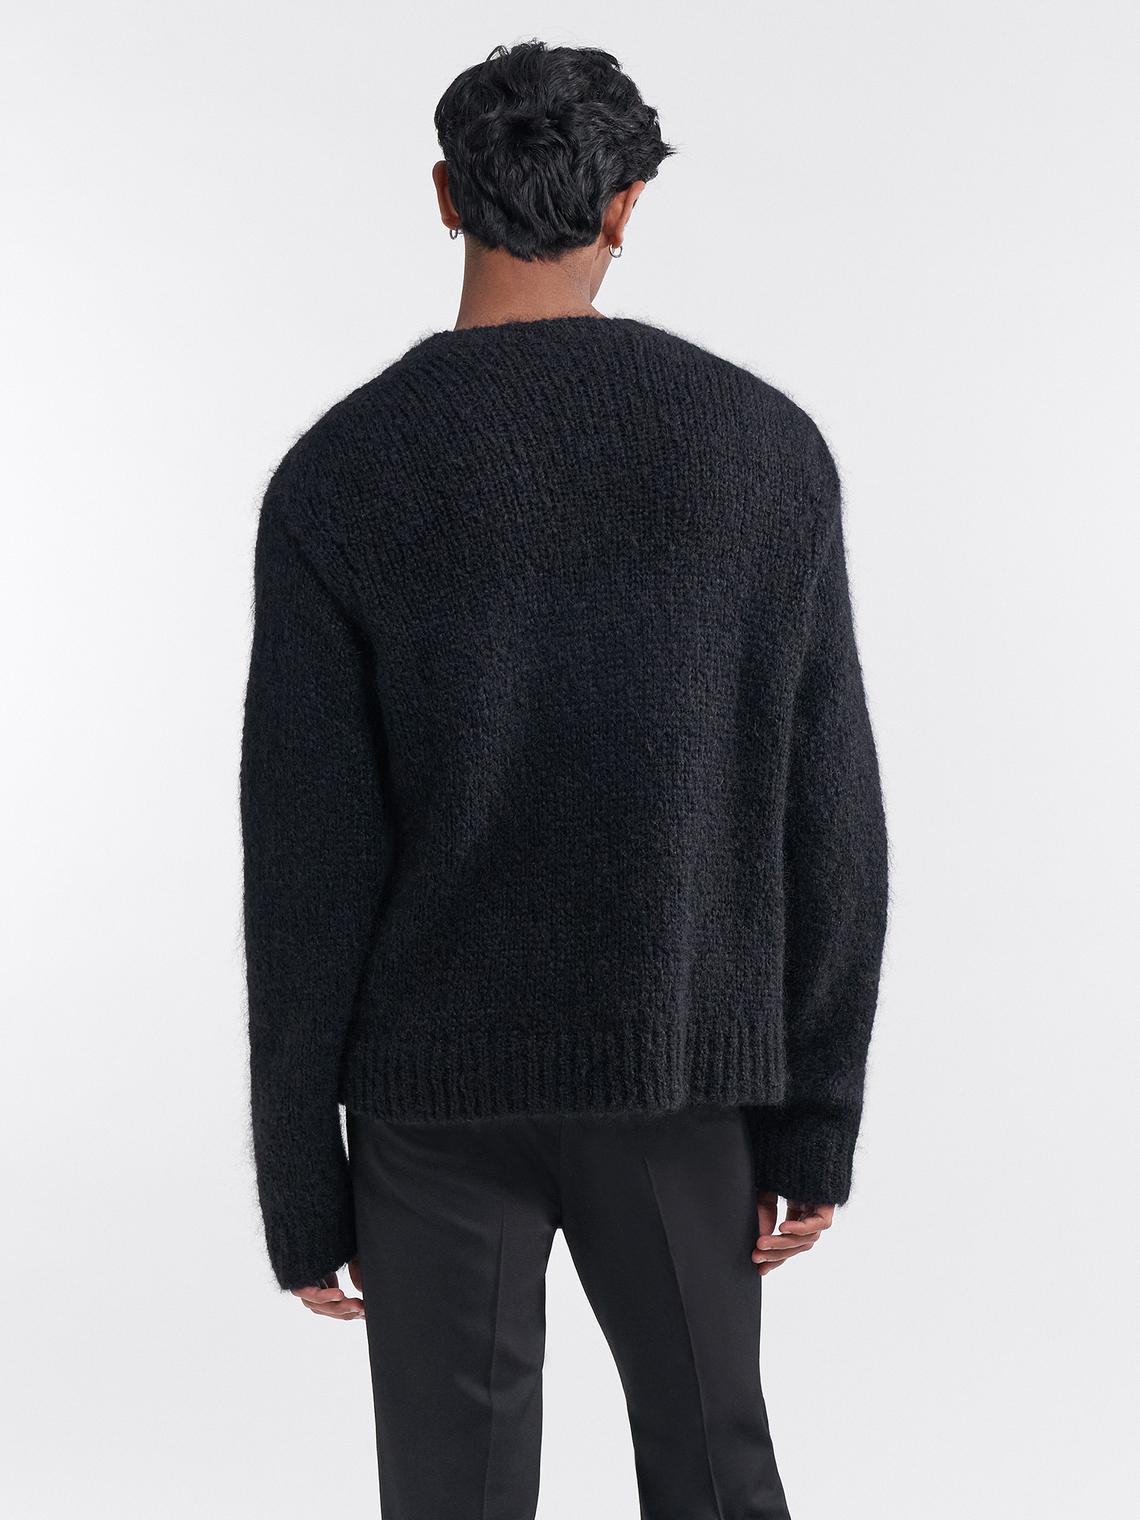 Sebastian sweater by Filippa K - black